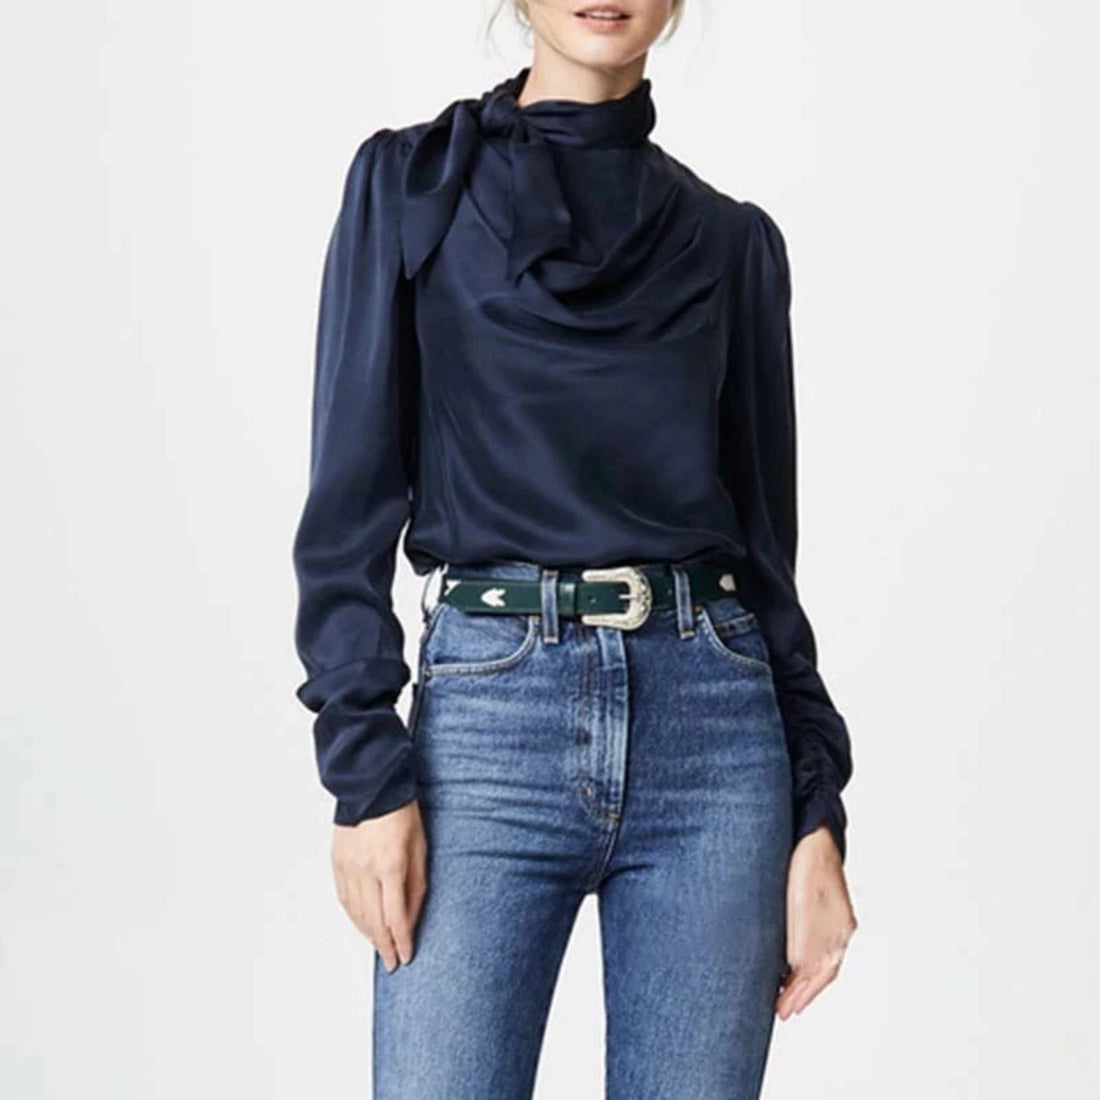 Women's Autumn Polyester Long-Sleeved Blouse